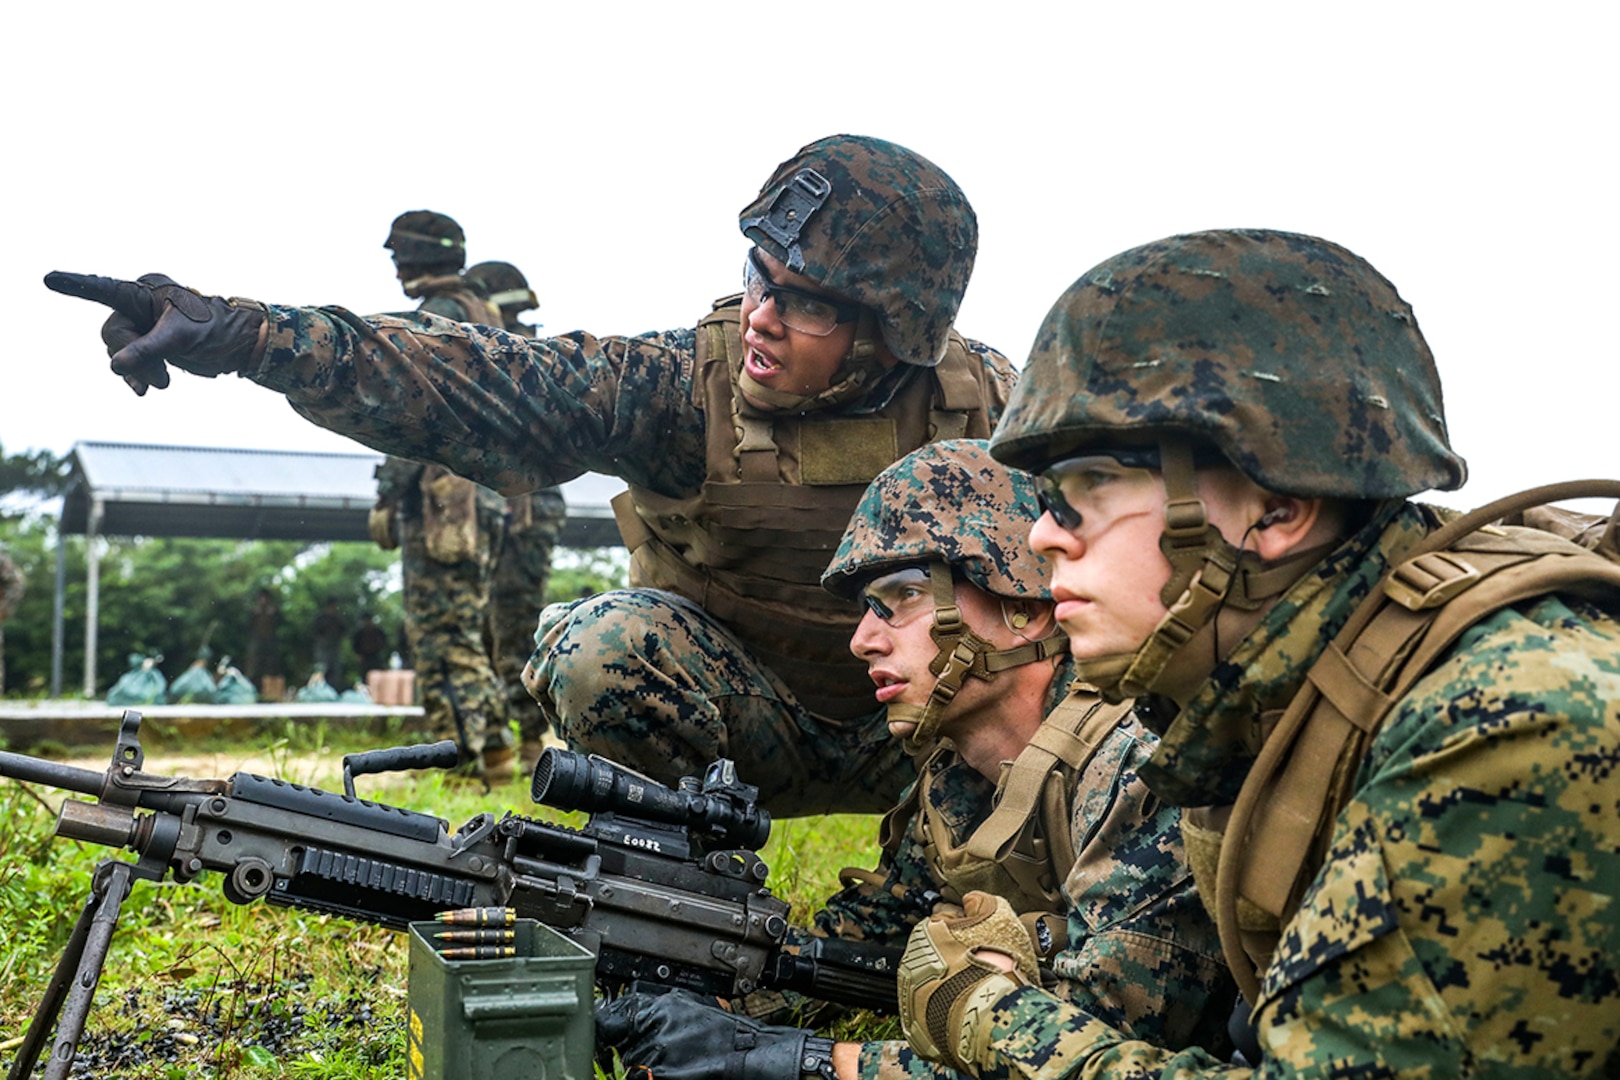 Combat Logistics Regiment-37 Marines Employ Machine Guns While Strengthening Communication Skills